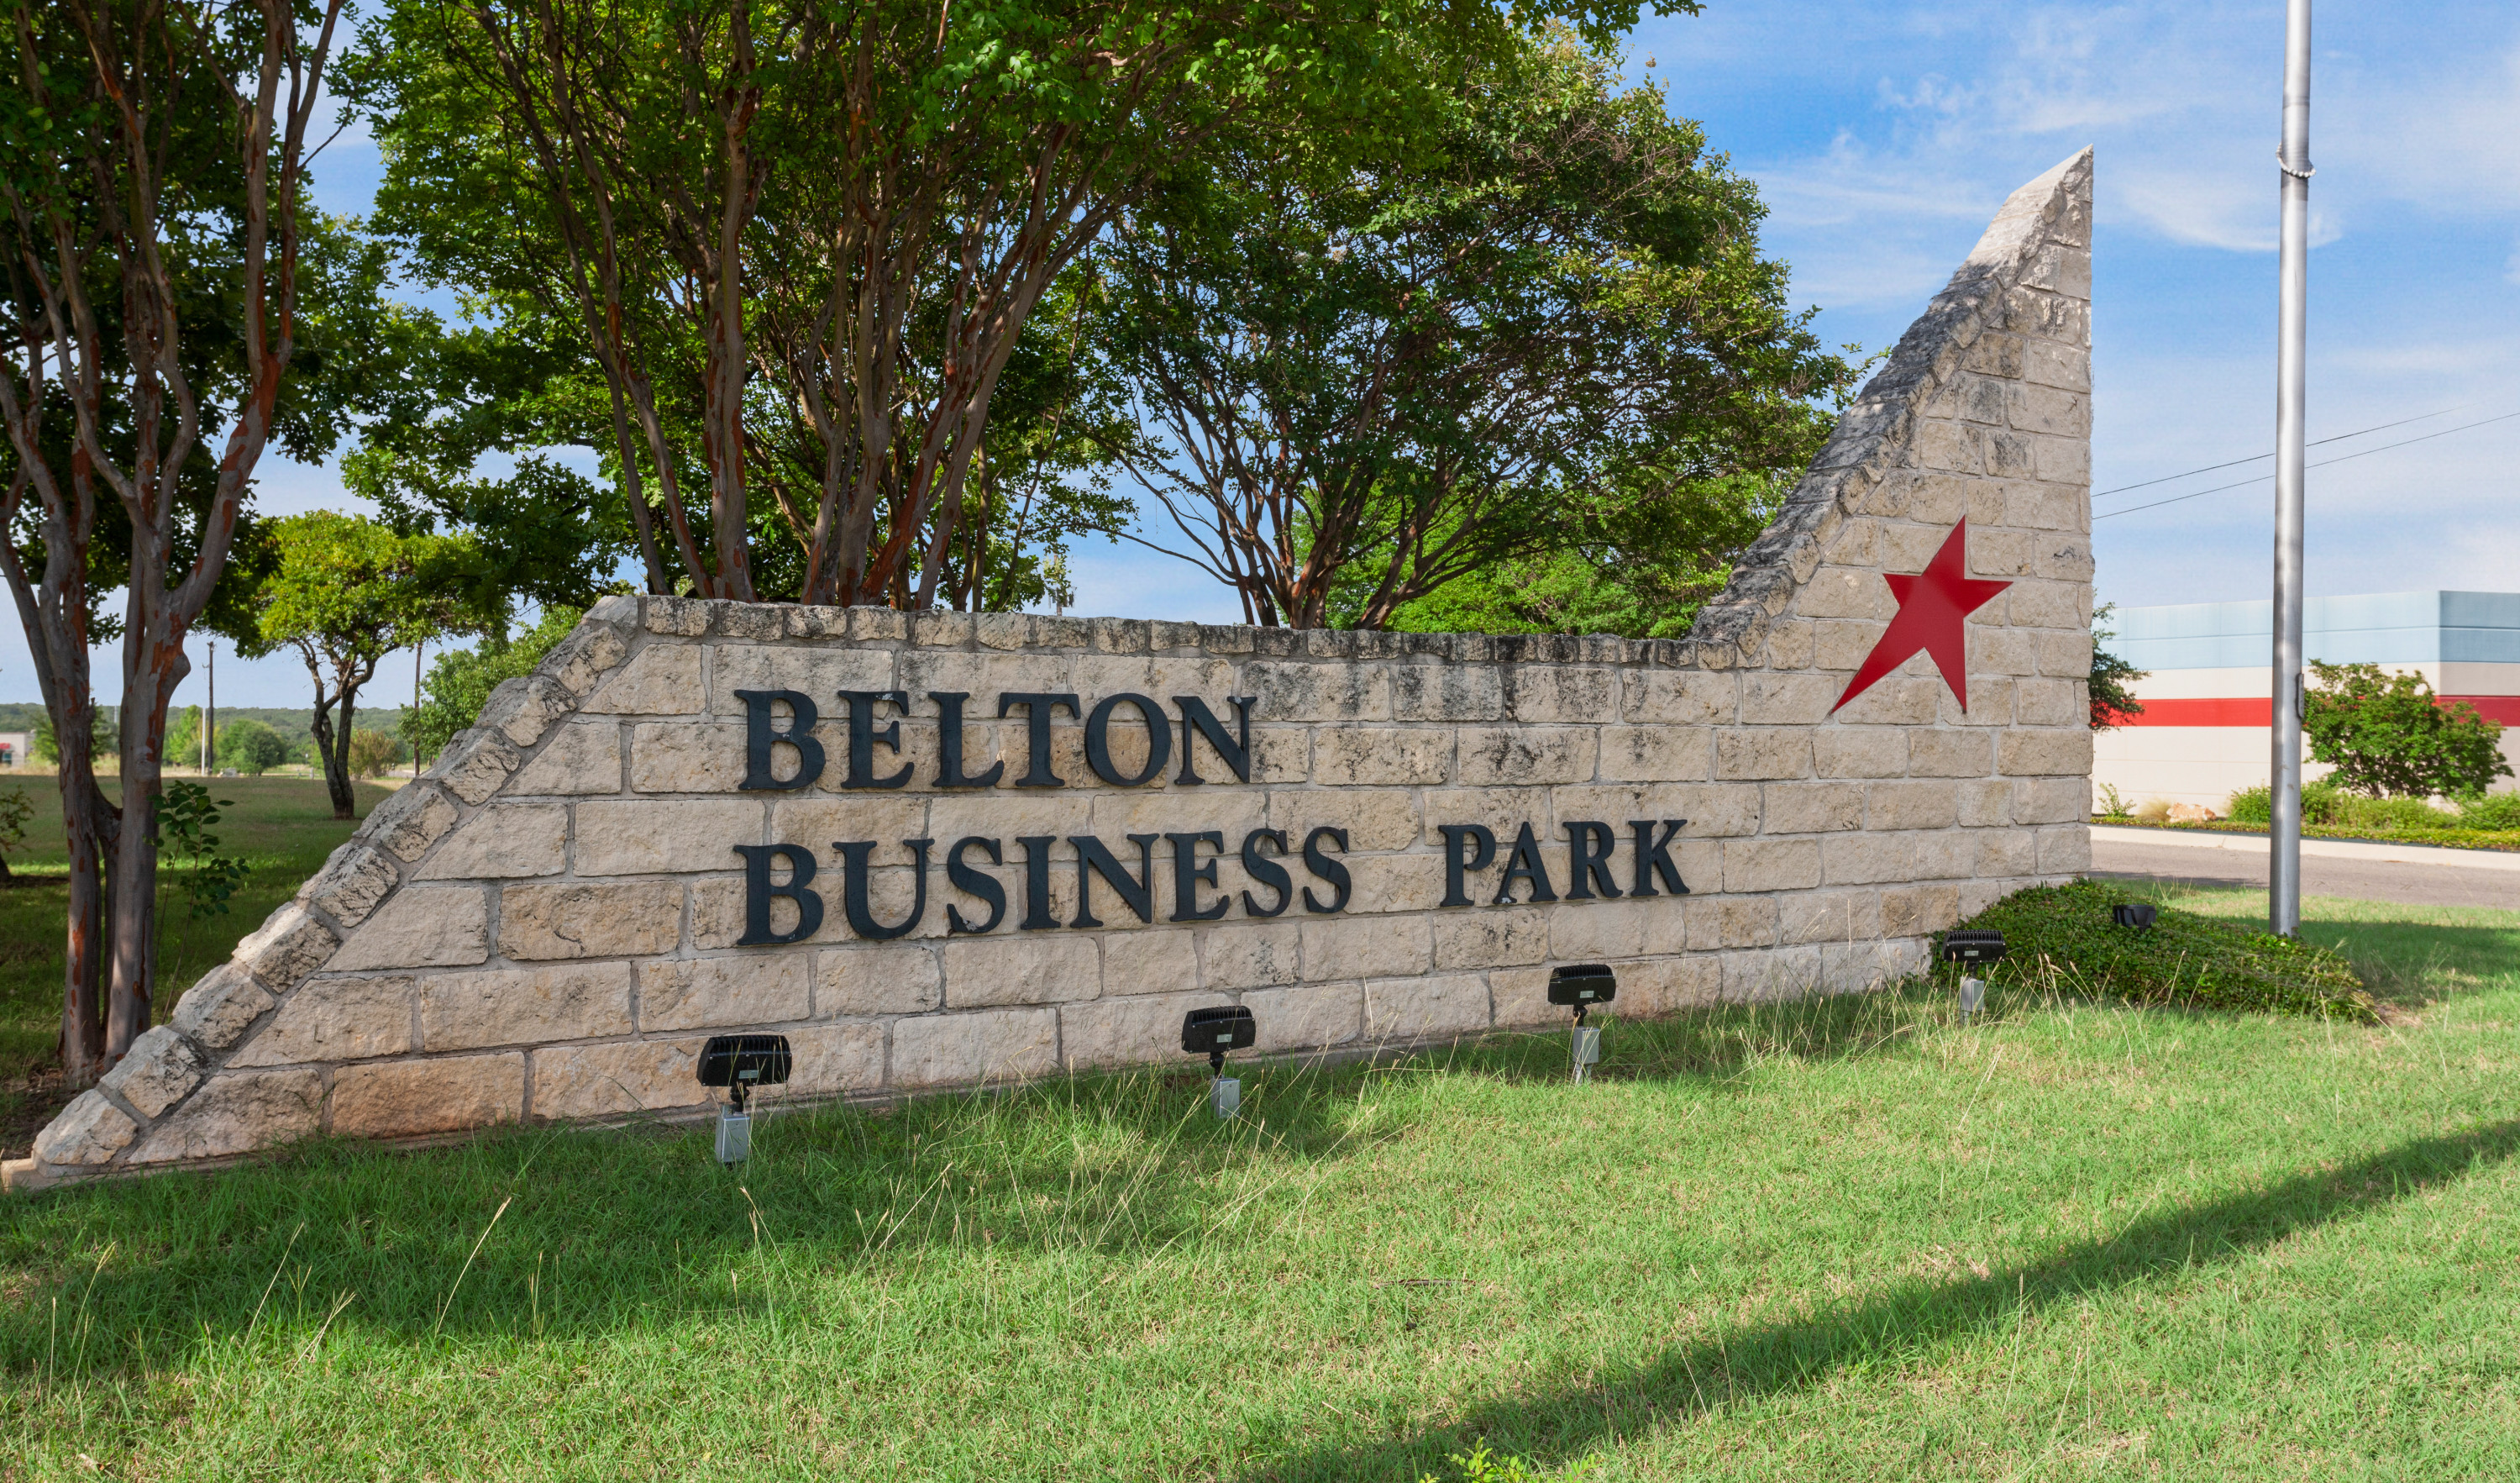 Belton Business Park stone sign